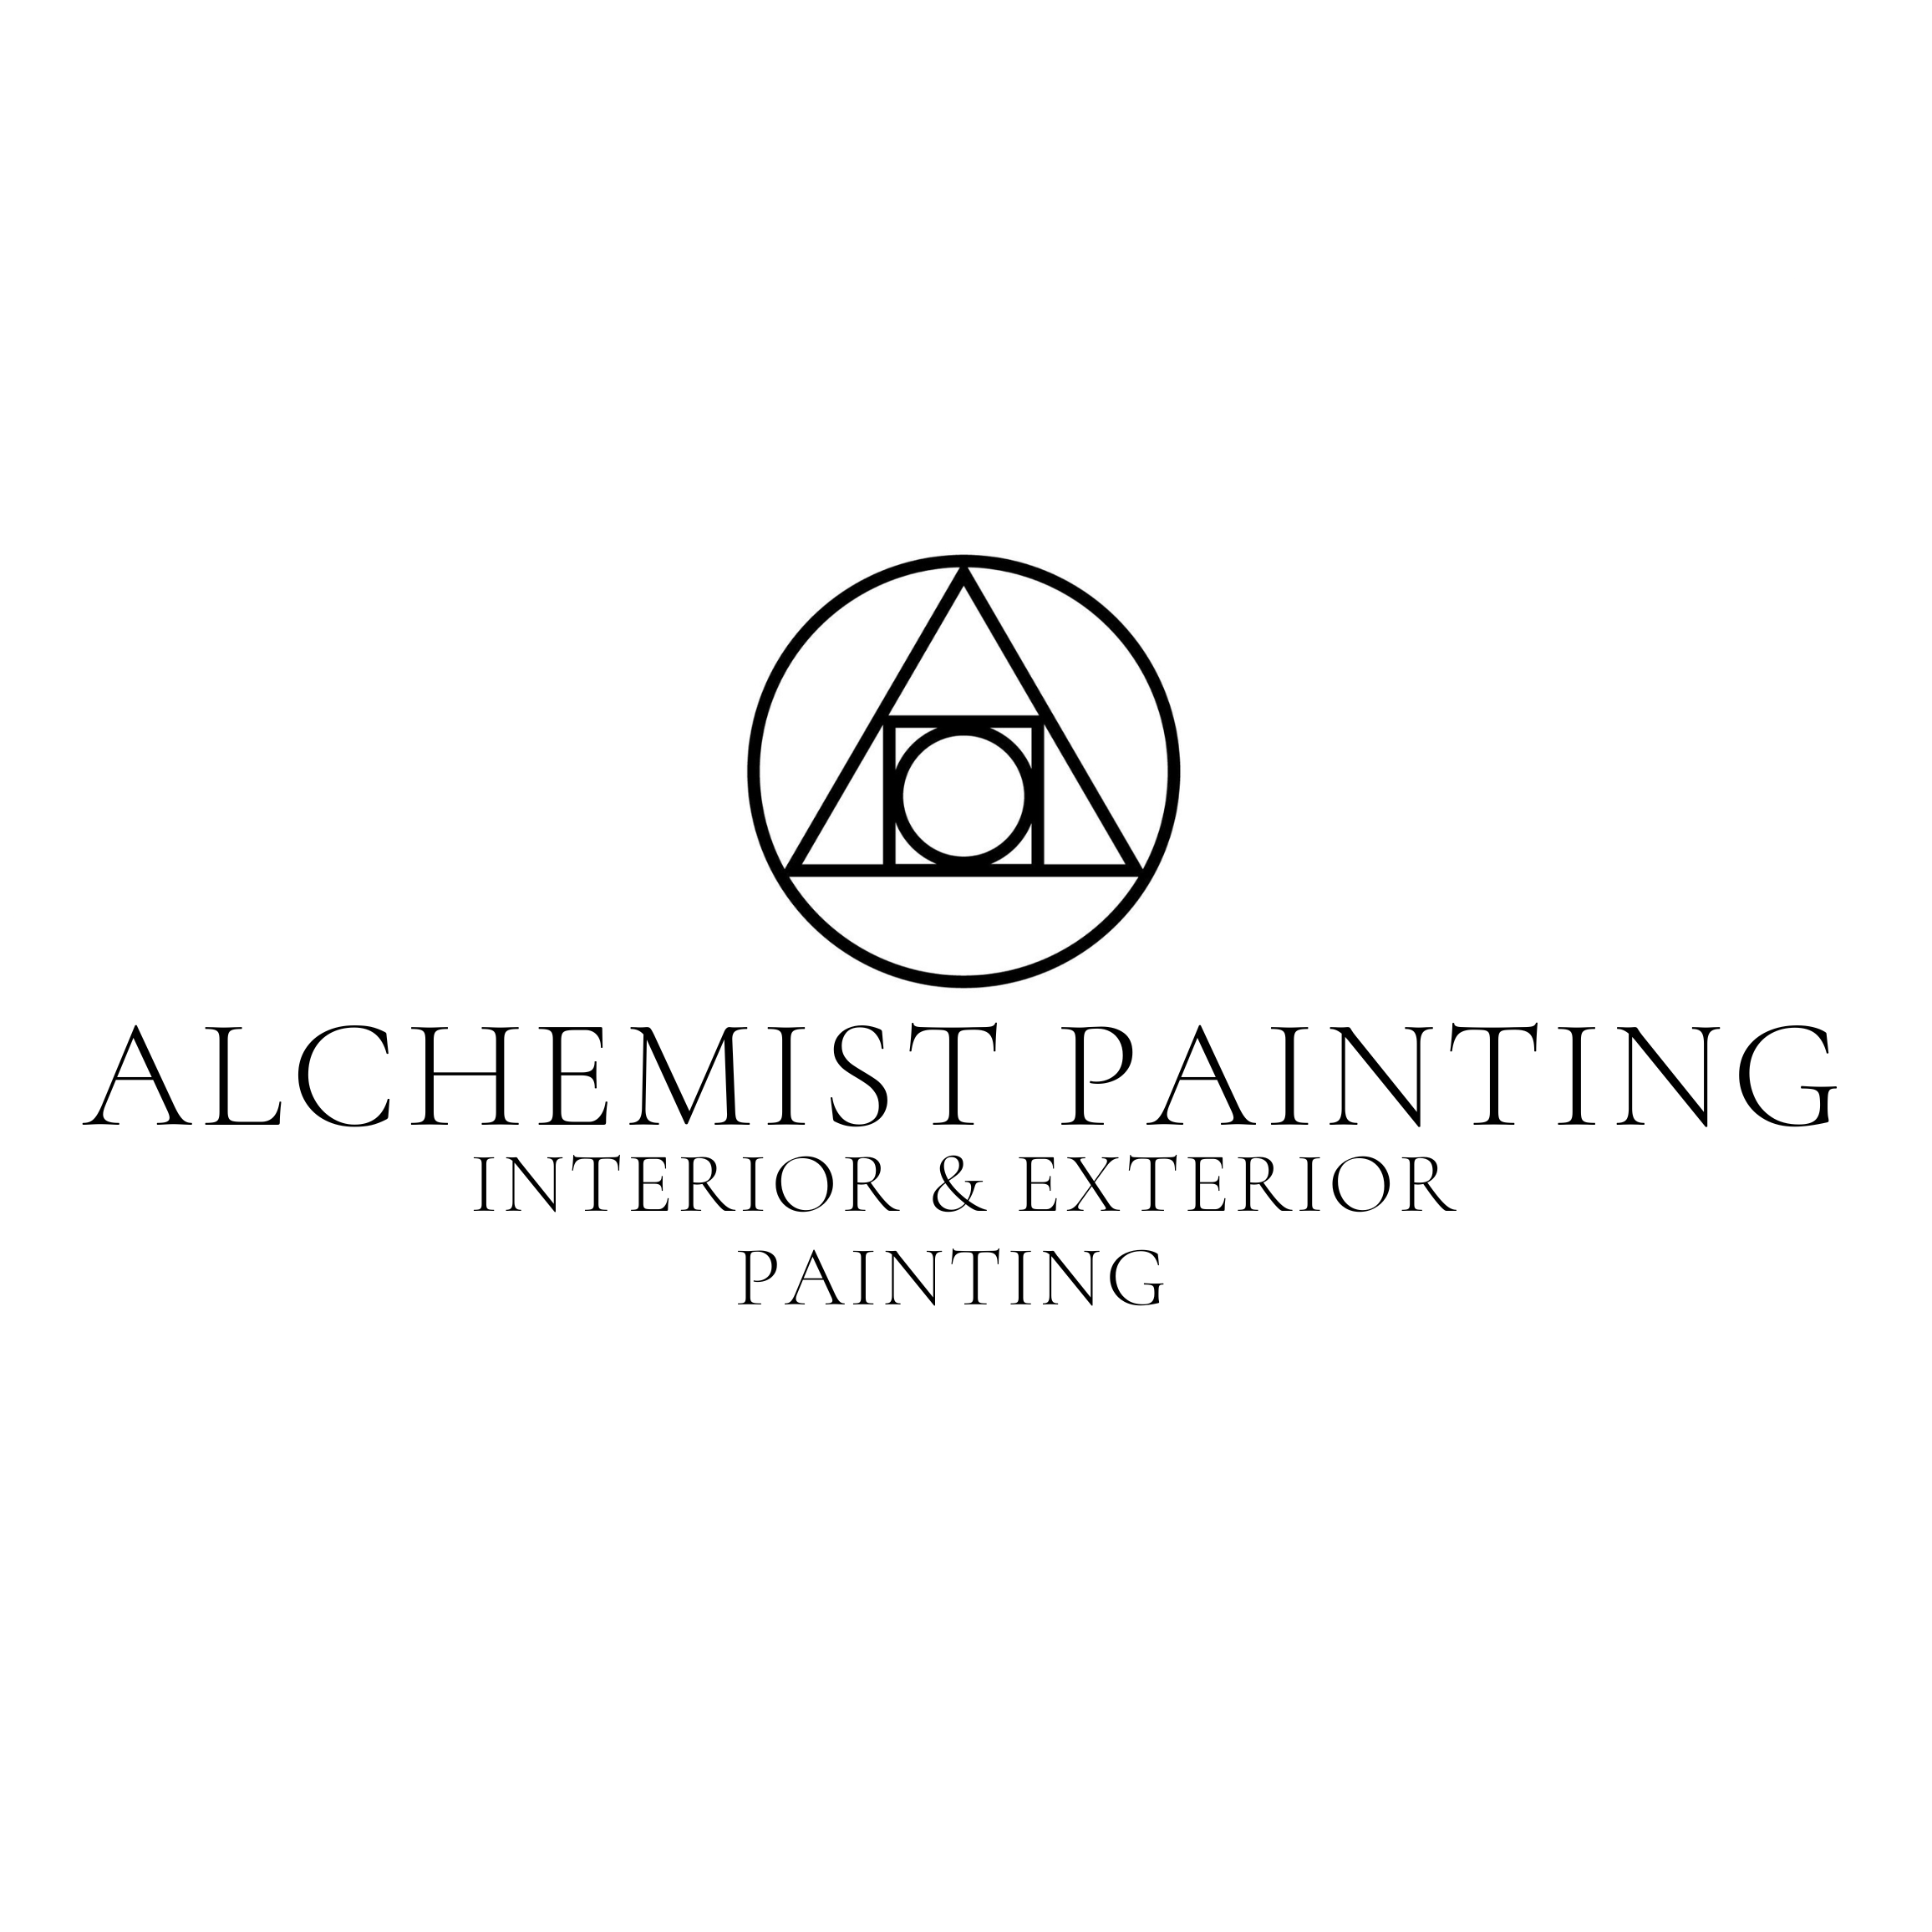 Alchemist Painting